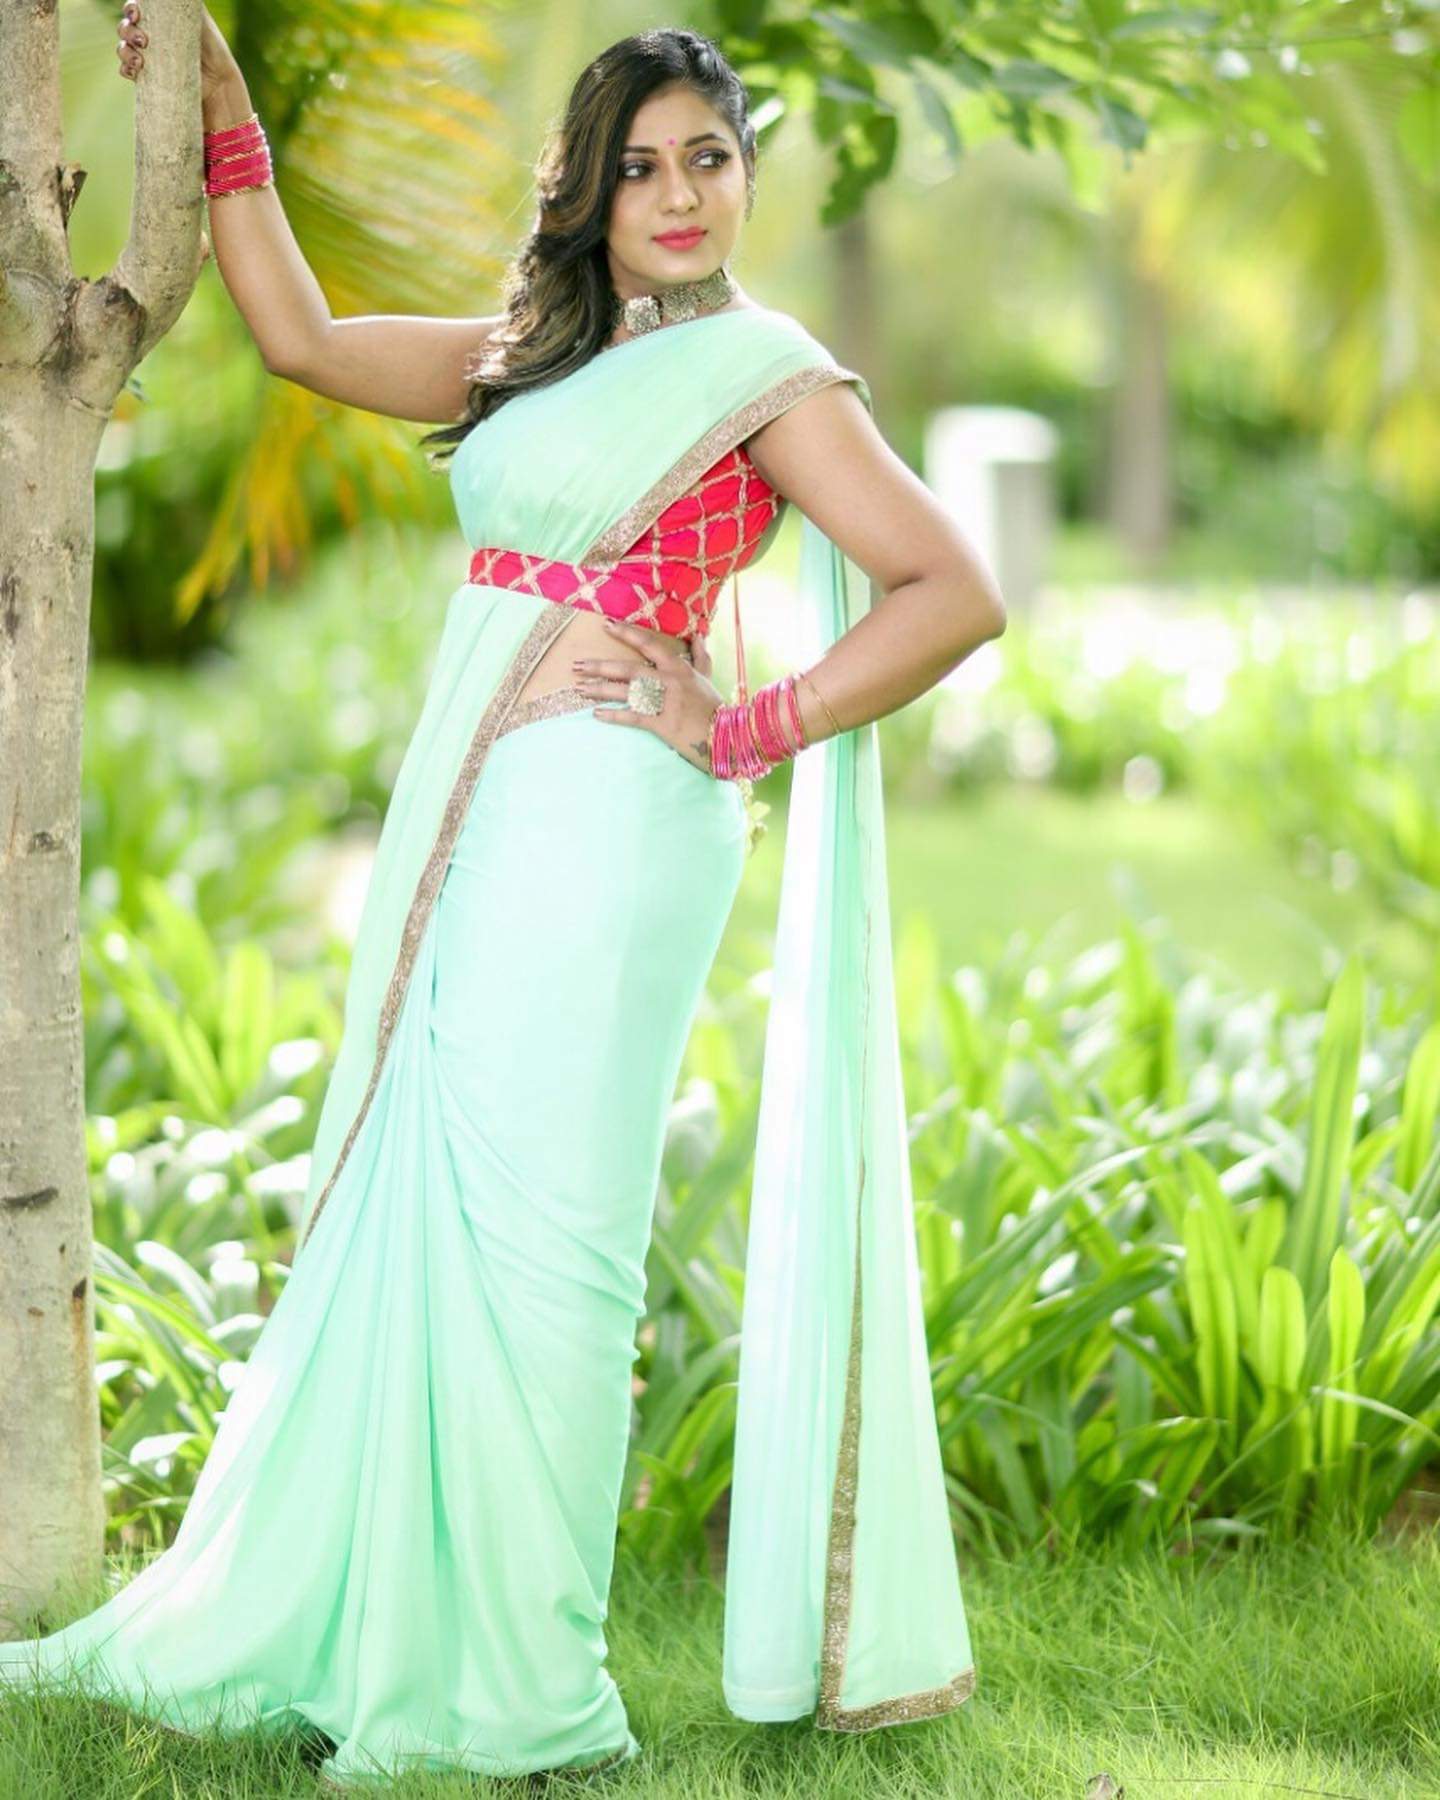 Biggboss tamil fame Reshma Pasupuleti latest pics